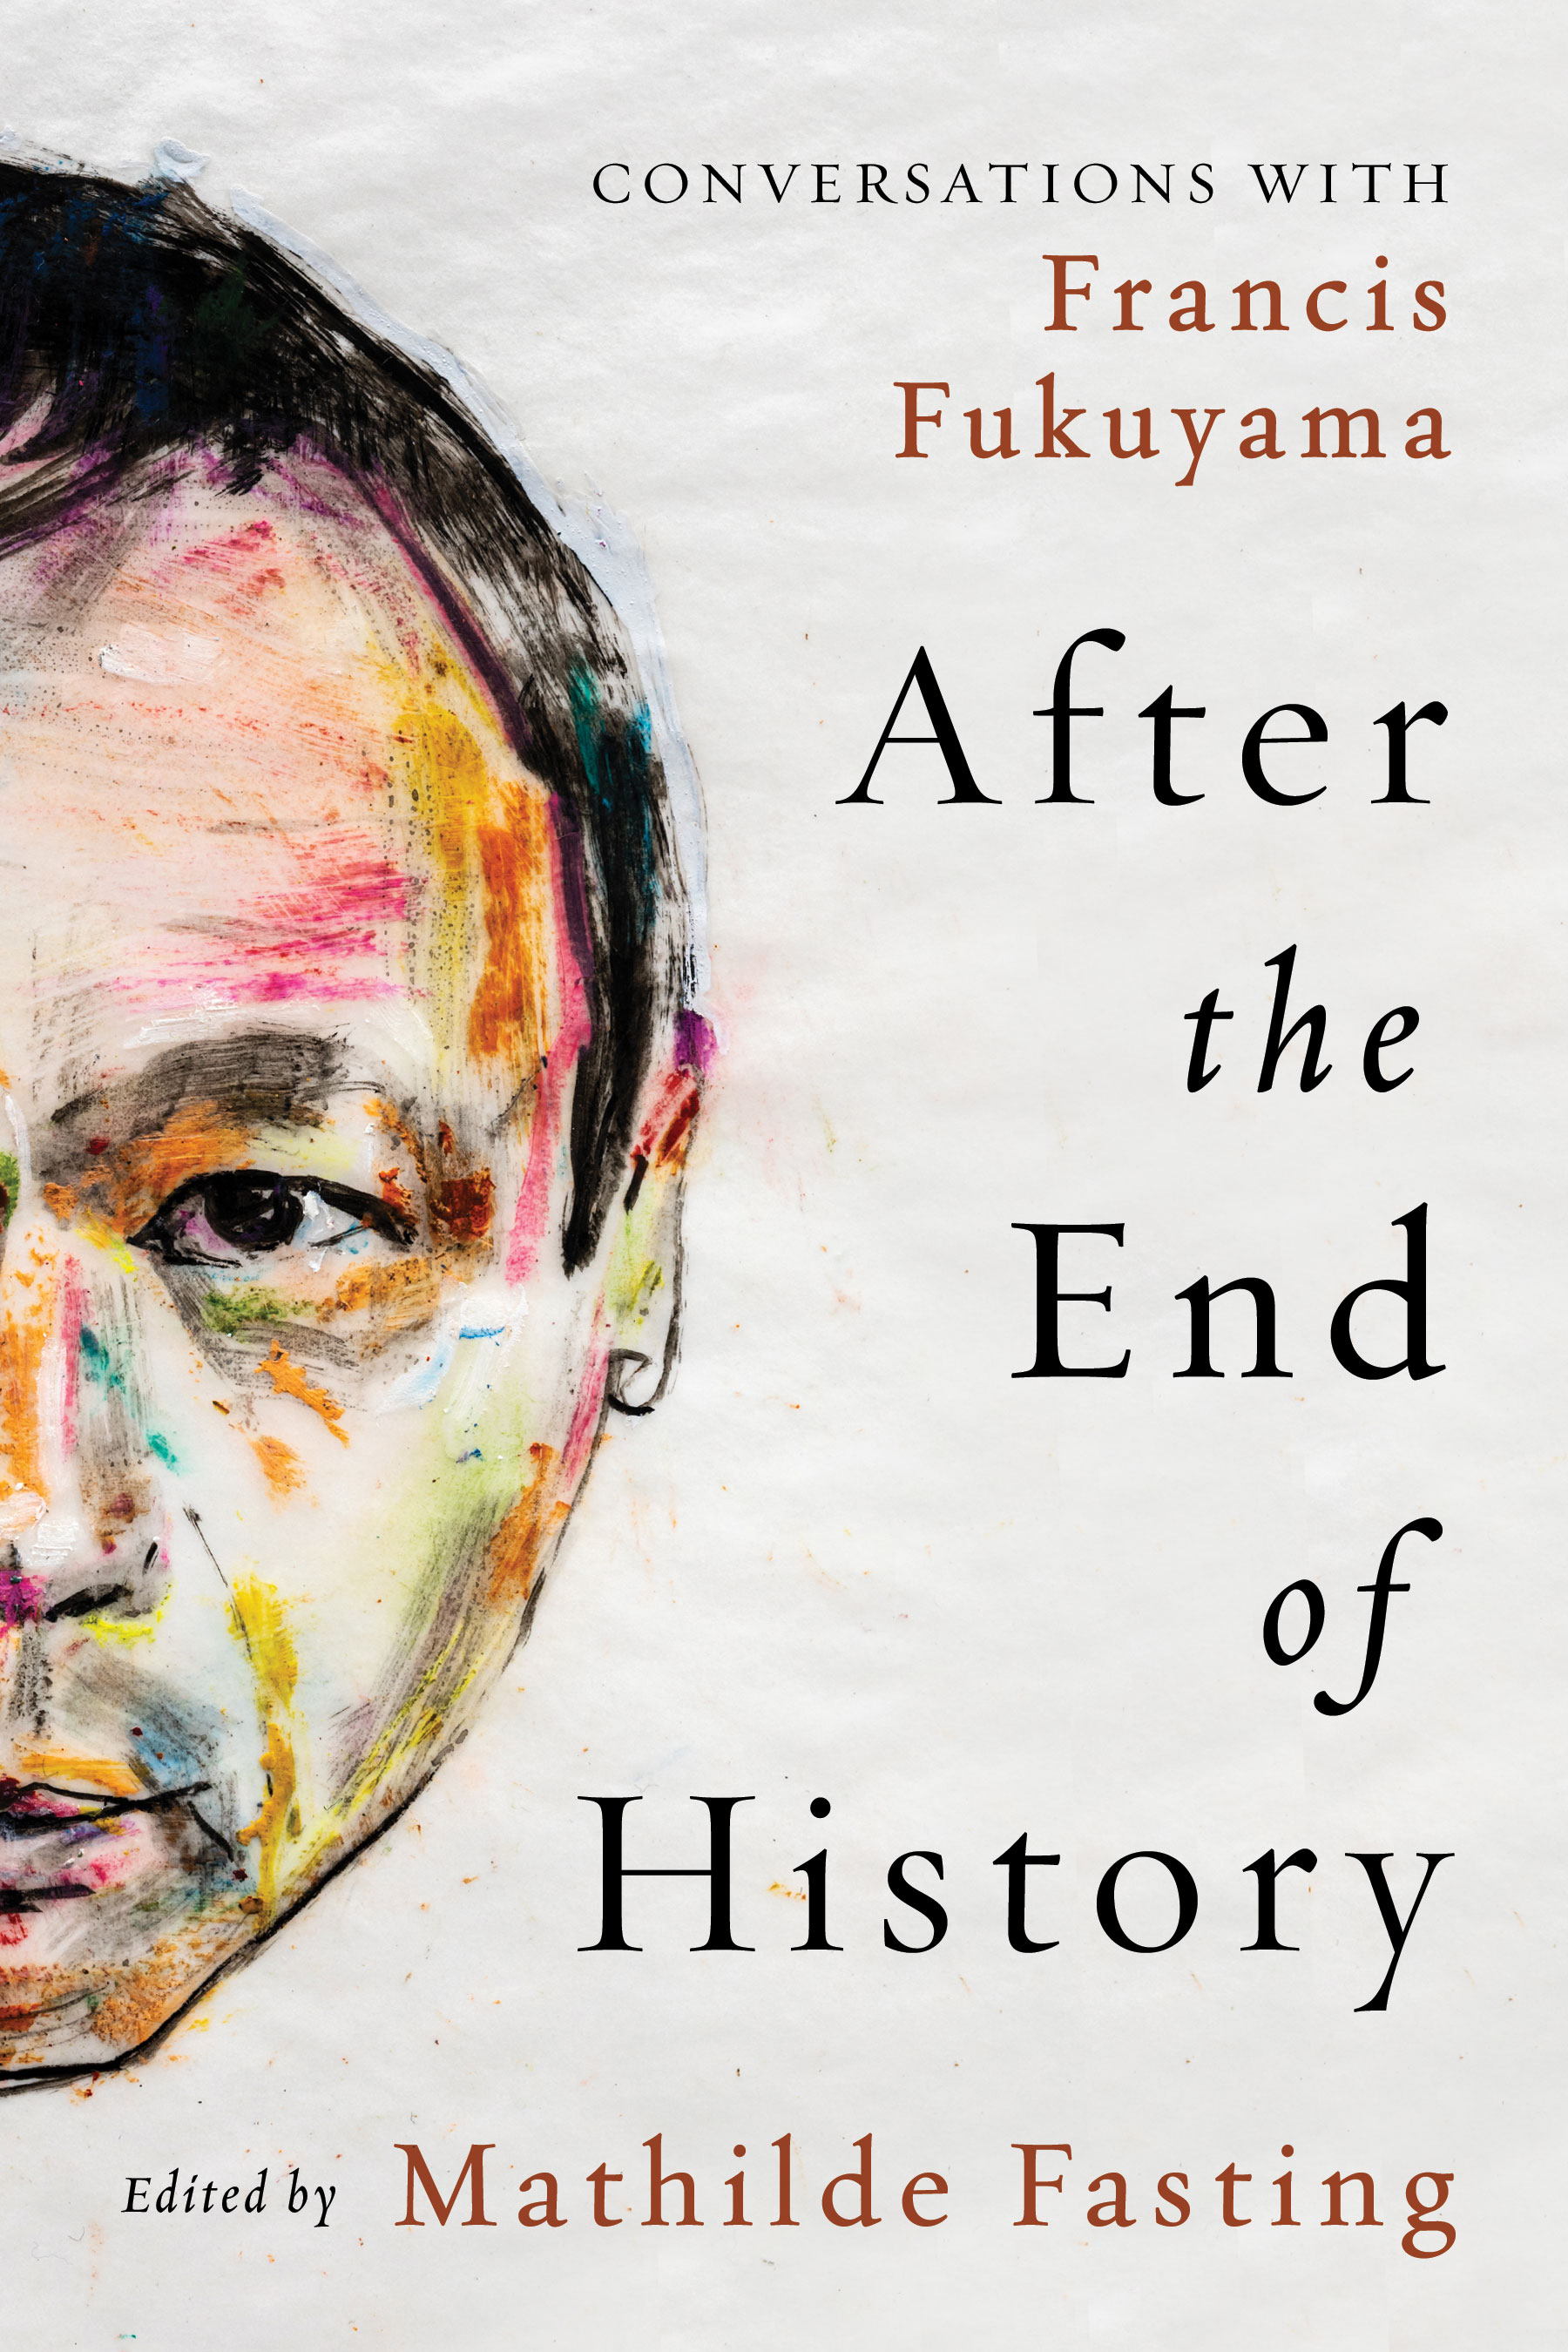 fukuyama the end of history essay